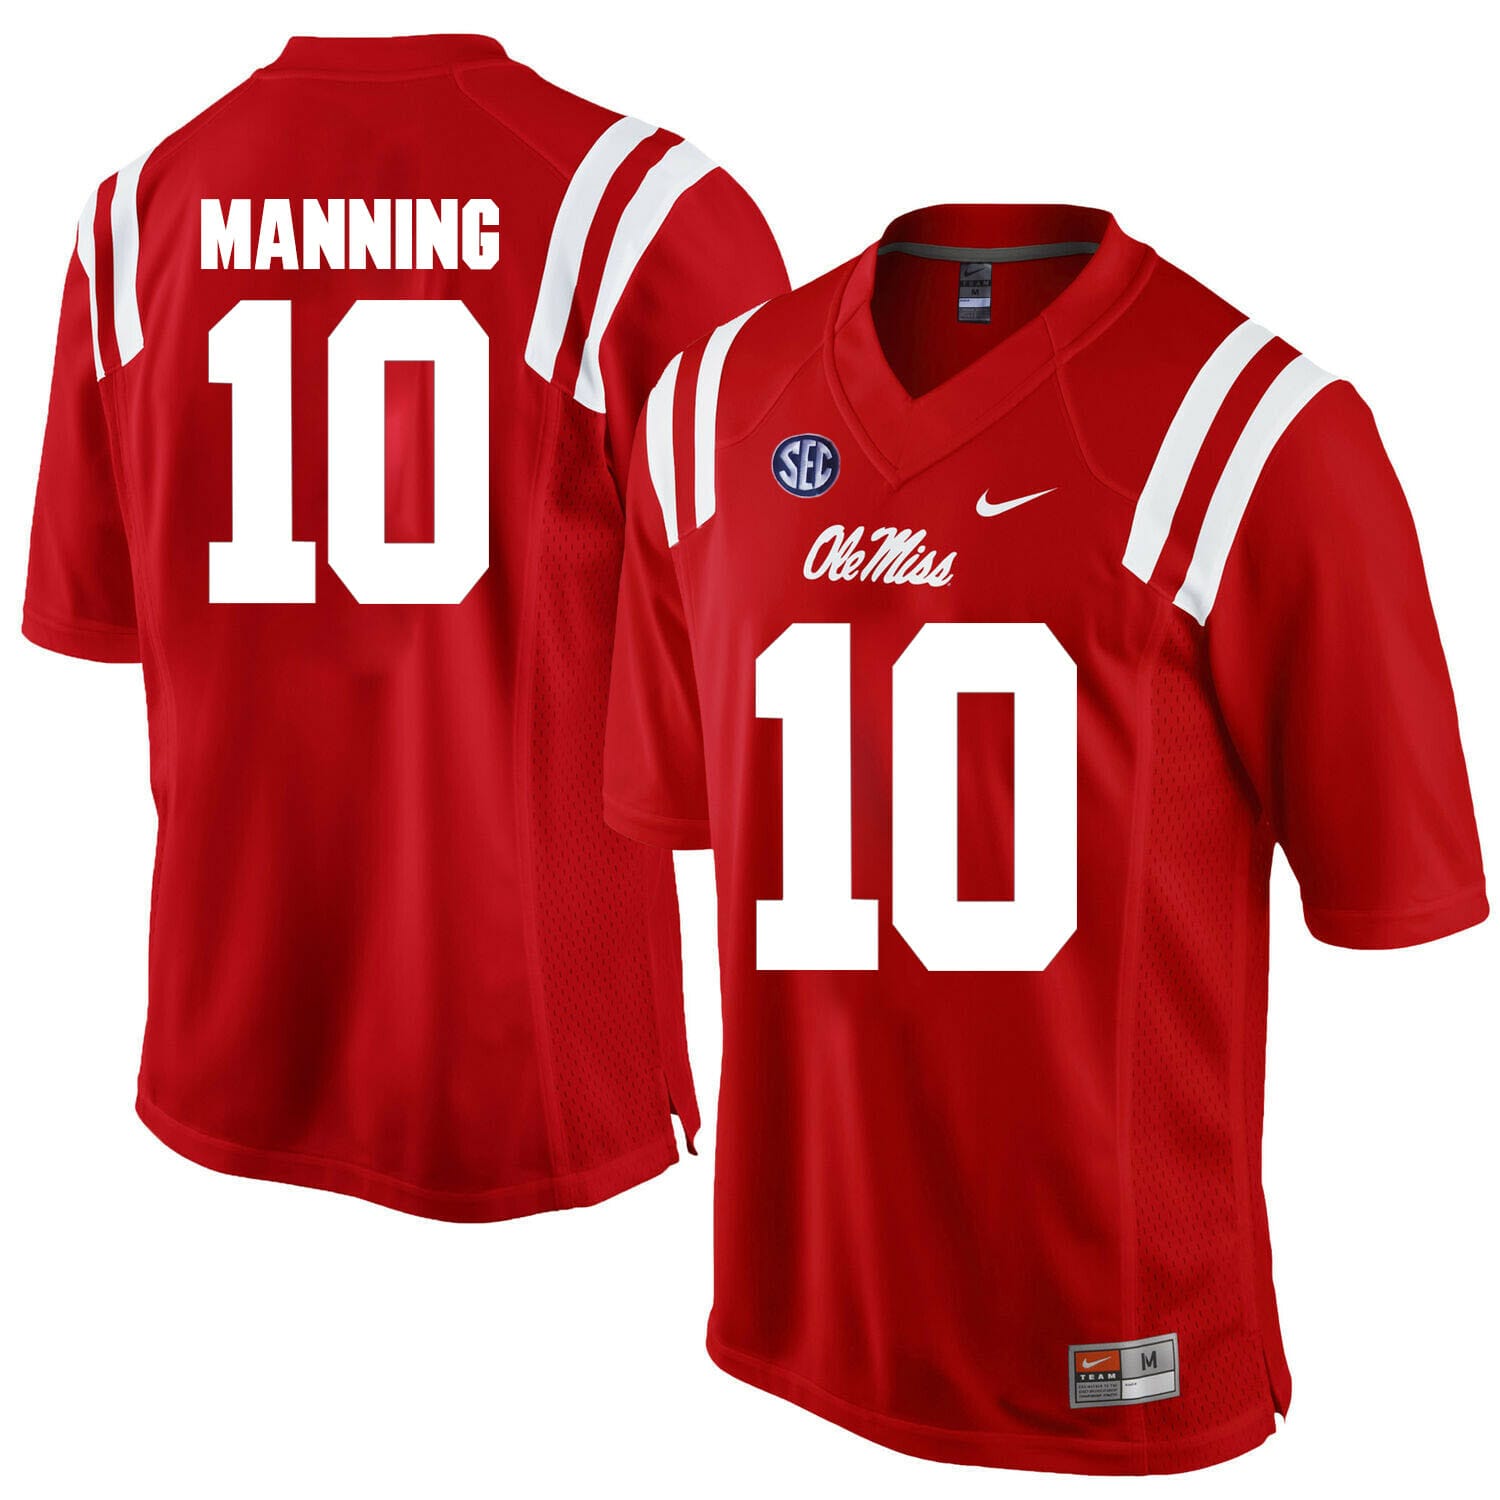 Ole Miss to Celebrate Eli Manning This Weekend - Ole Miss Athletics